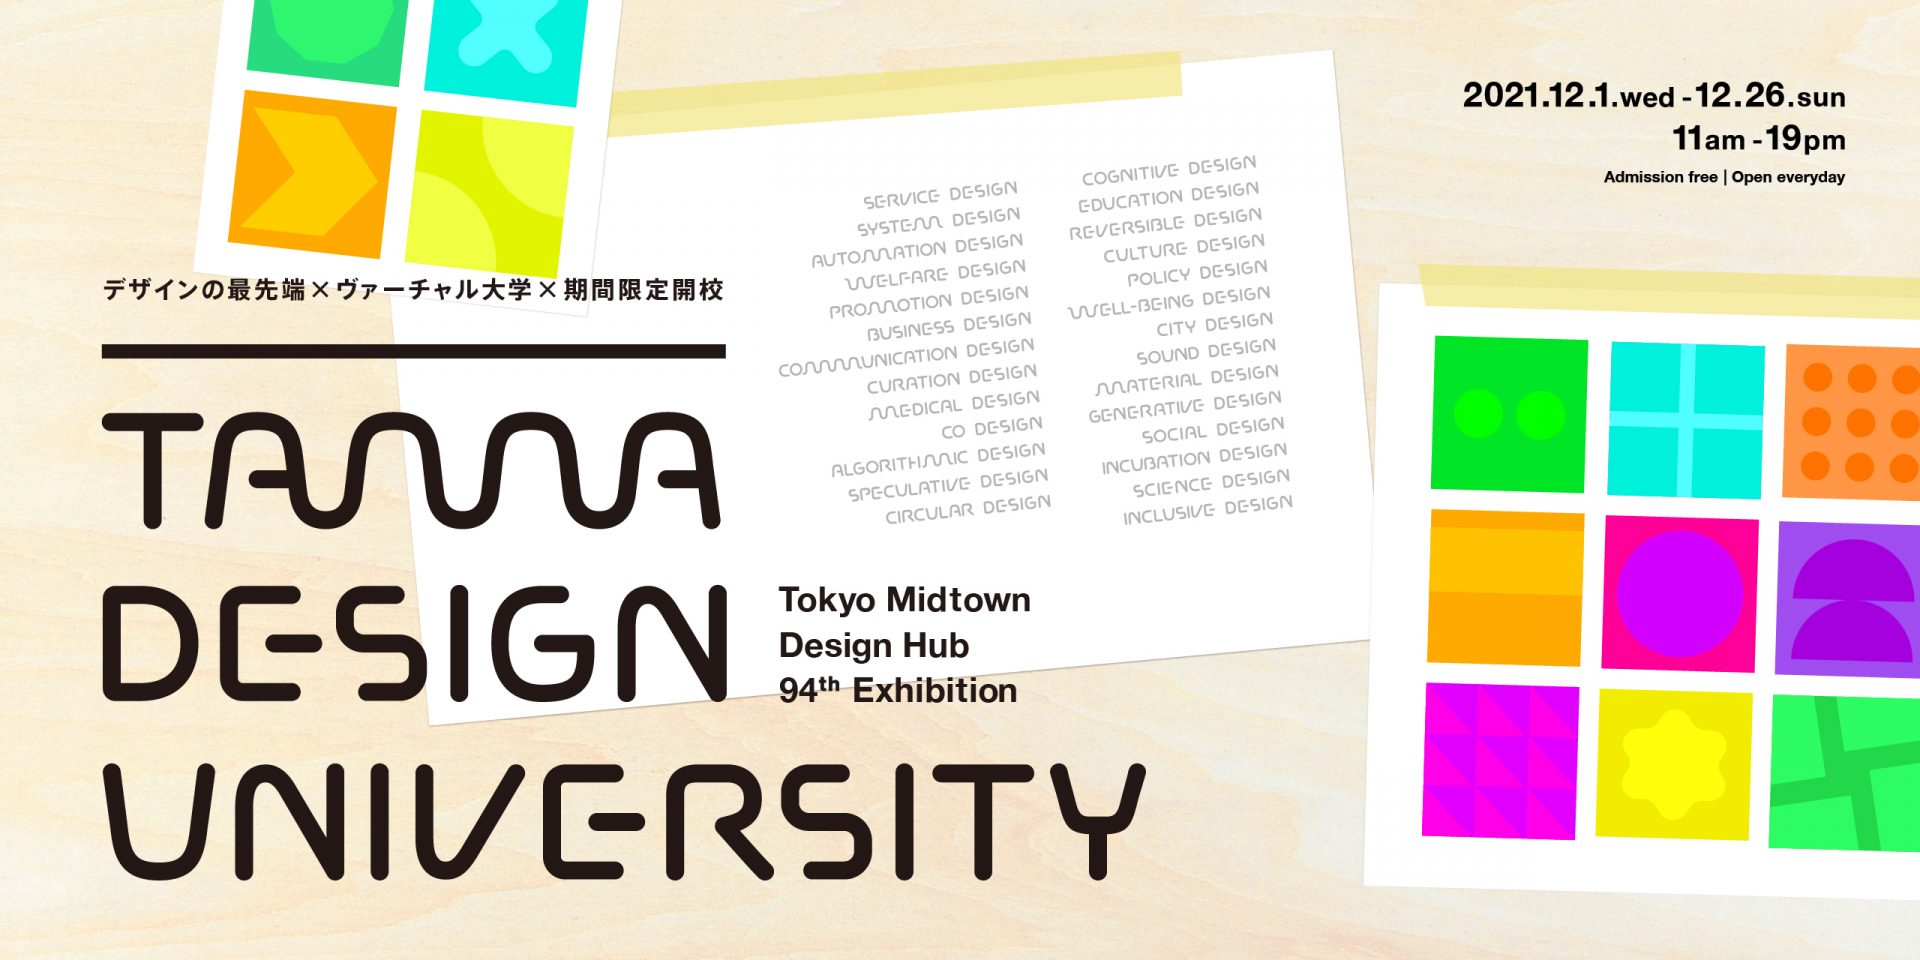 Exhibition Archive これからの時代に 必要なデザインとは何なのか 東京ミッドタウン デザインハブ第94回企画展 Tama Design University Tama Art University Bureau 多摩美術大学 Tub